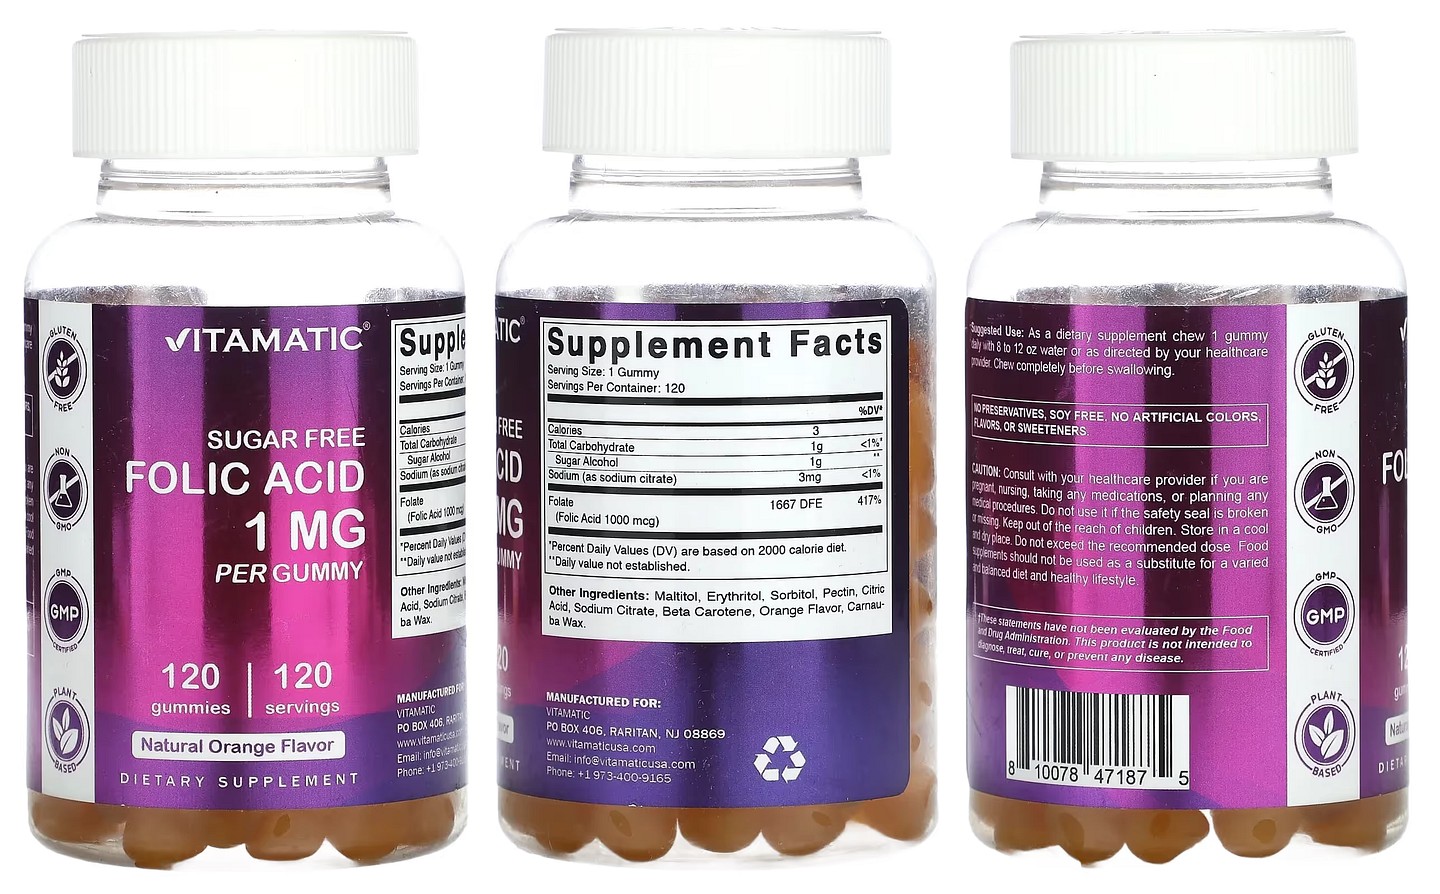 Vitamatic, Sugar Free Folic Acid packaging